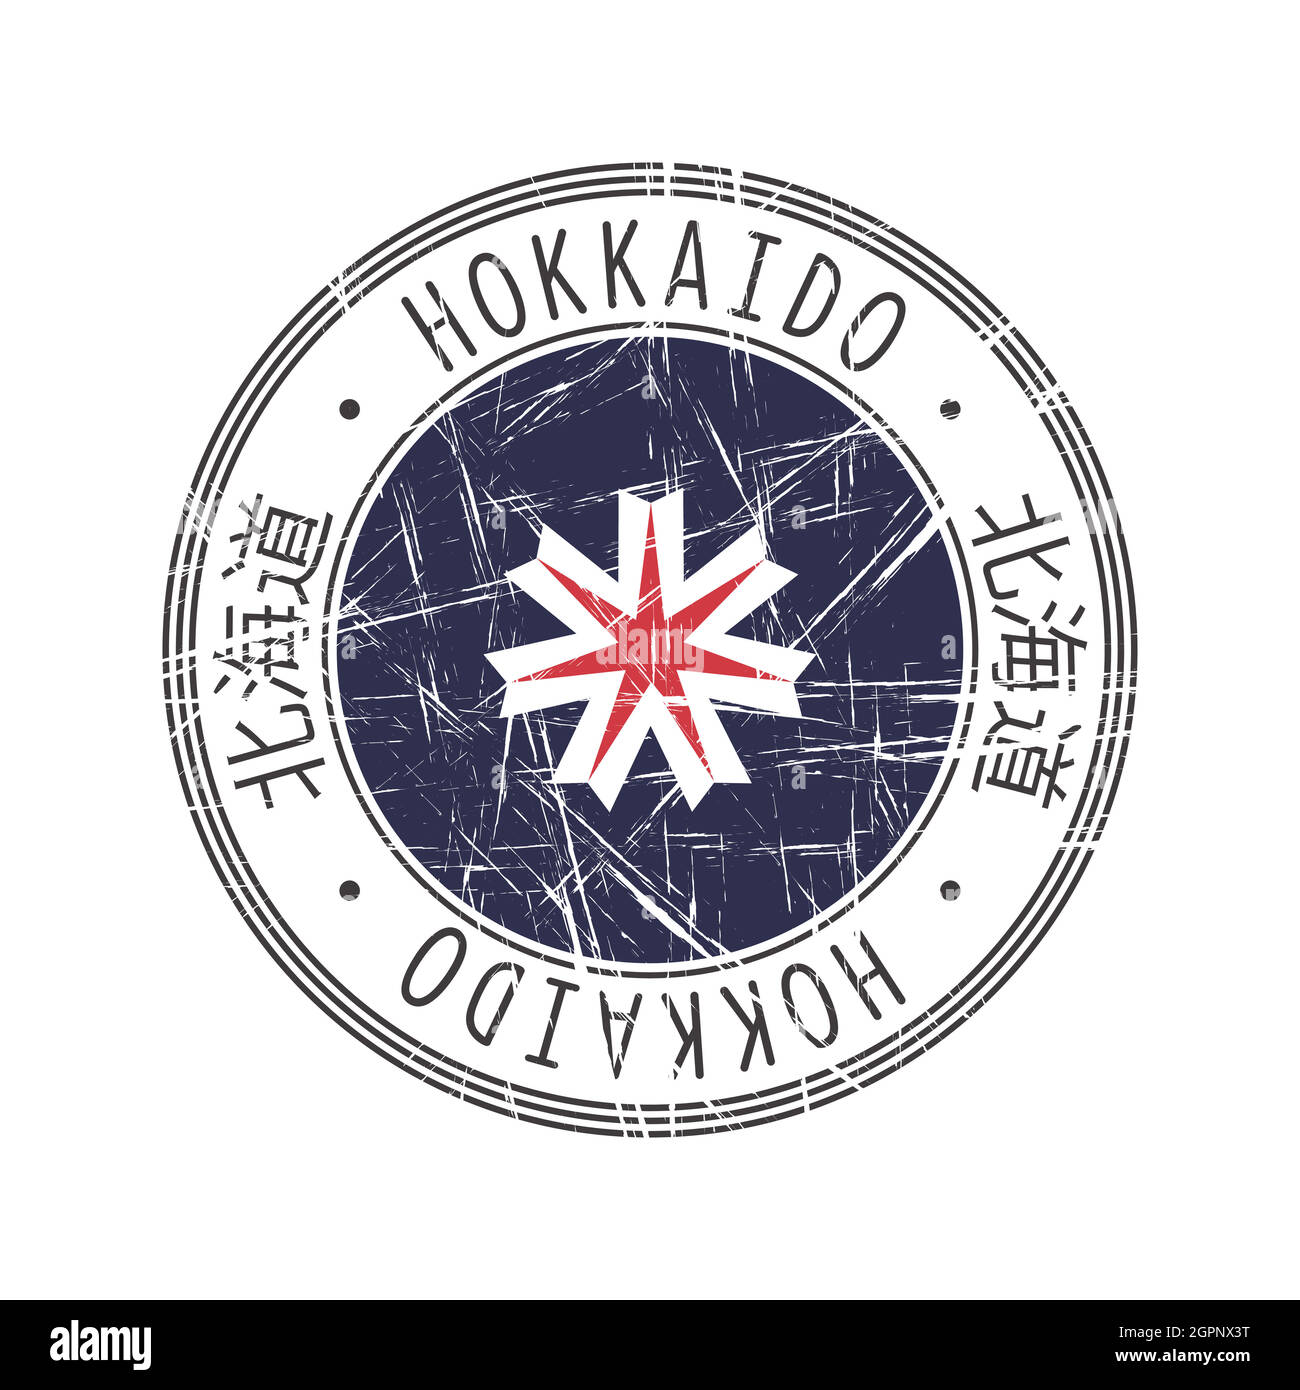 Hokkaido Prefecture rubber stamp Stock Vector